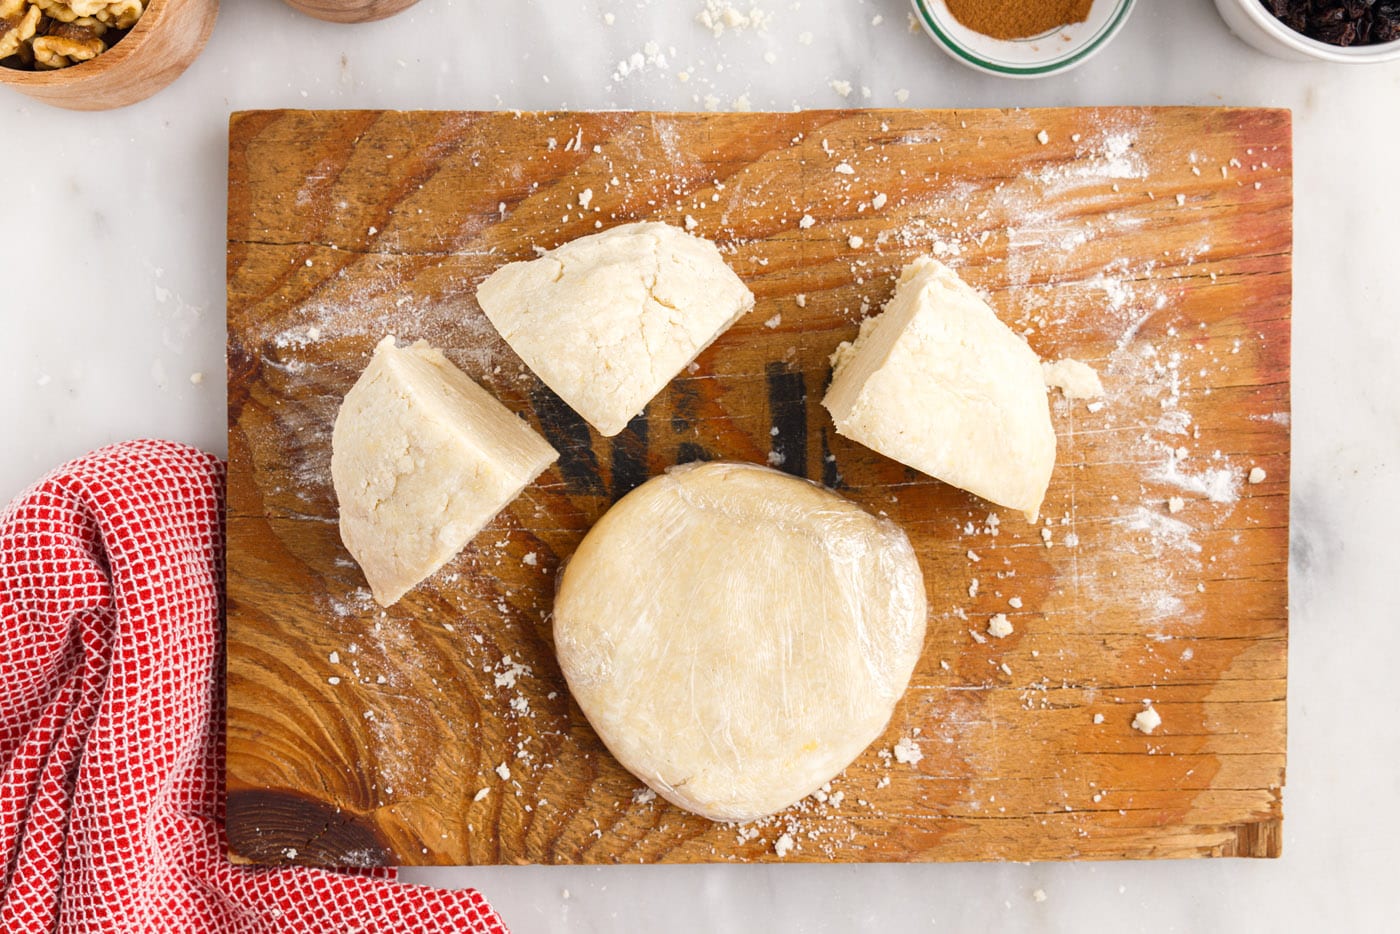 cutting rugelach dough